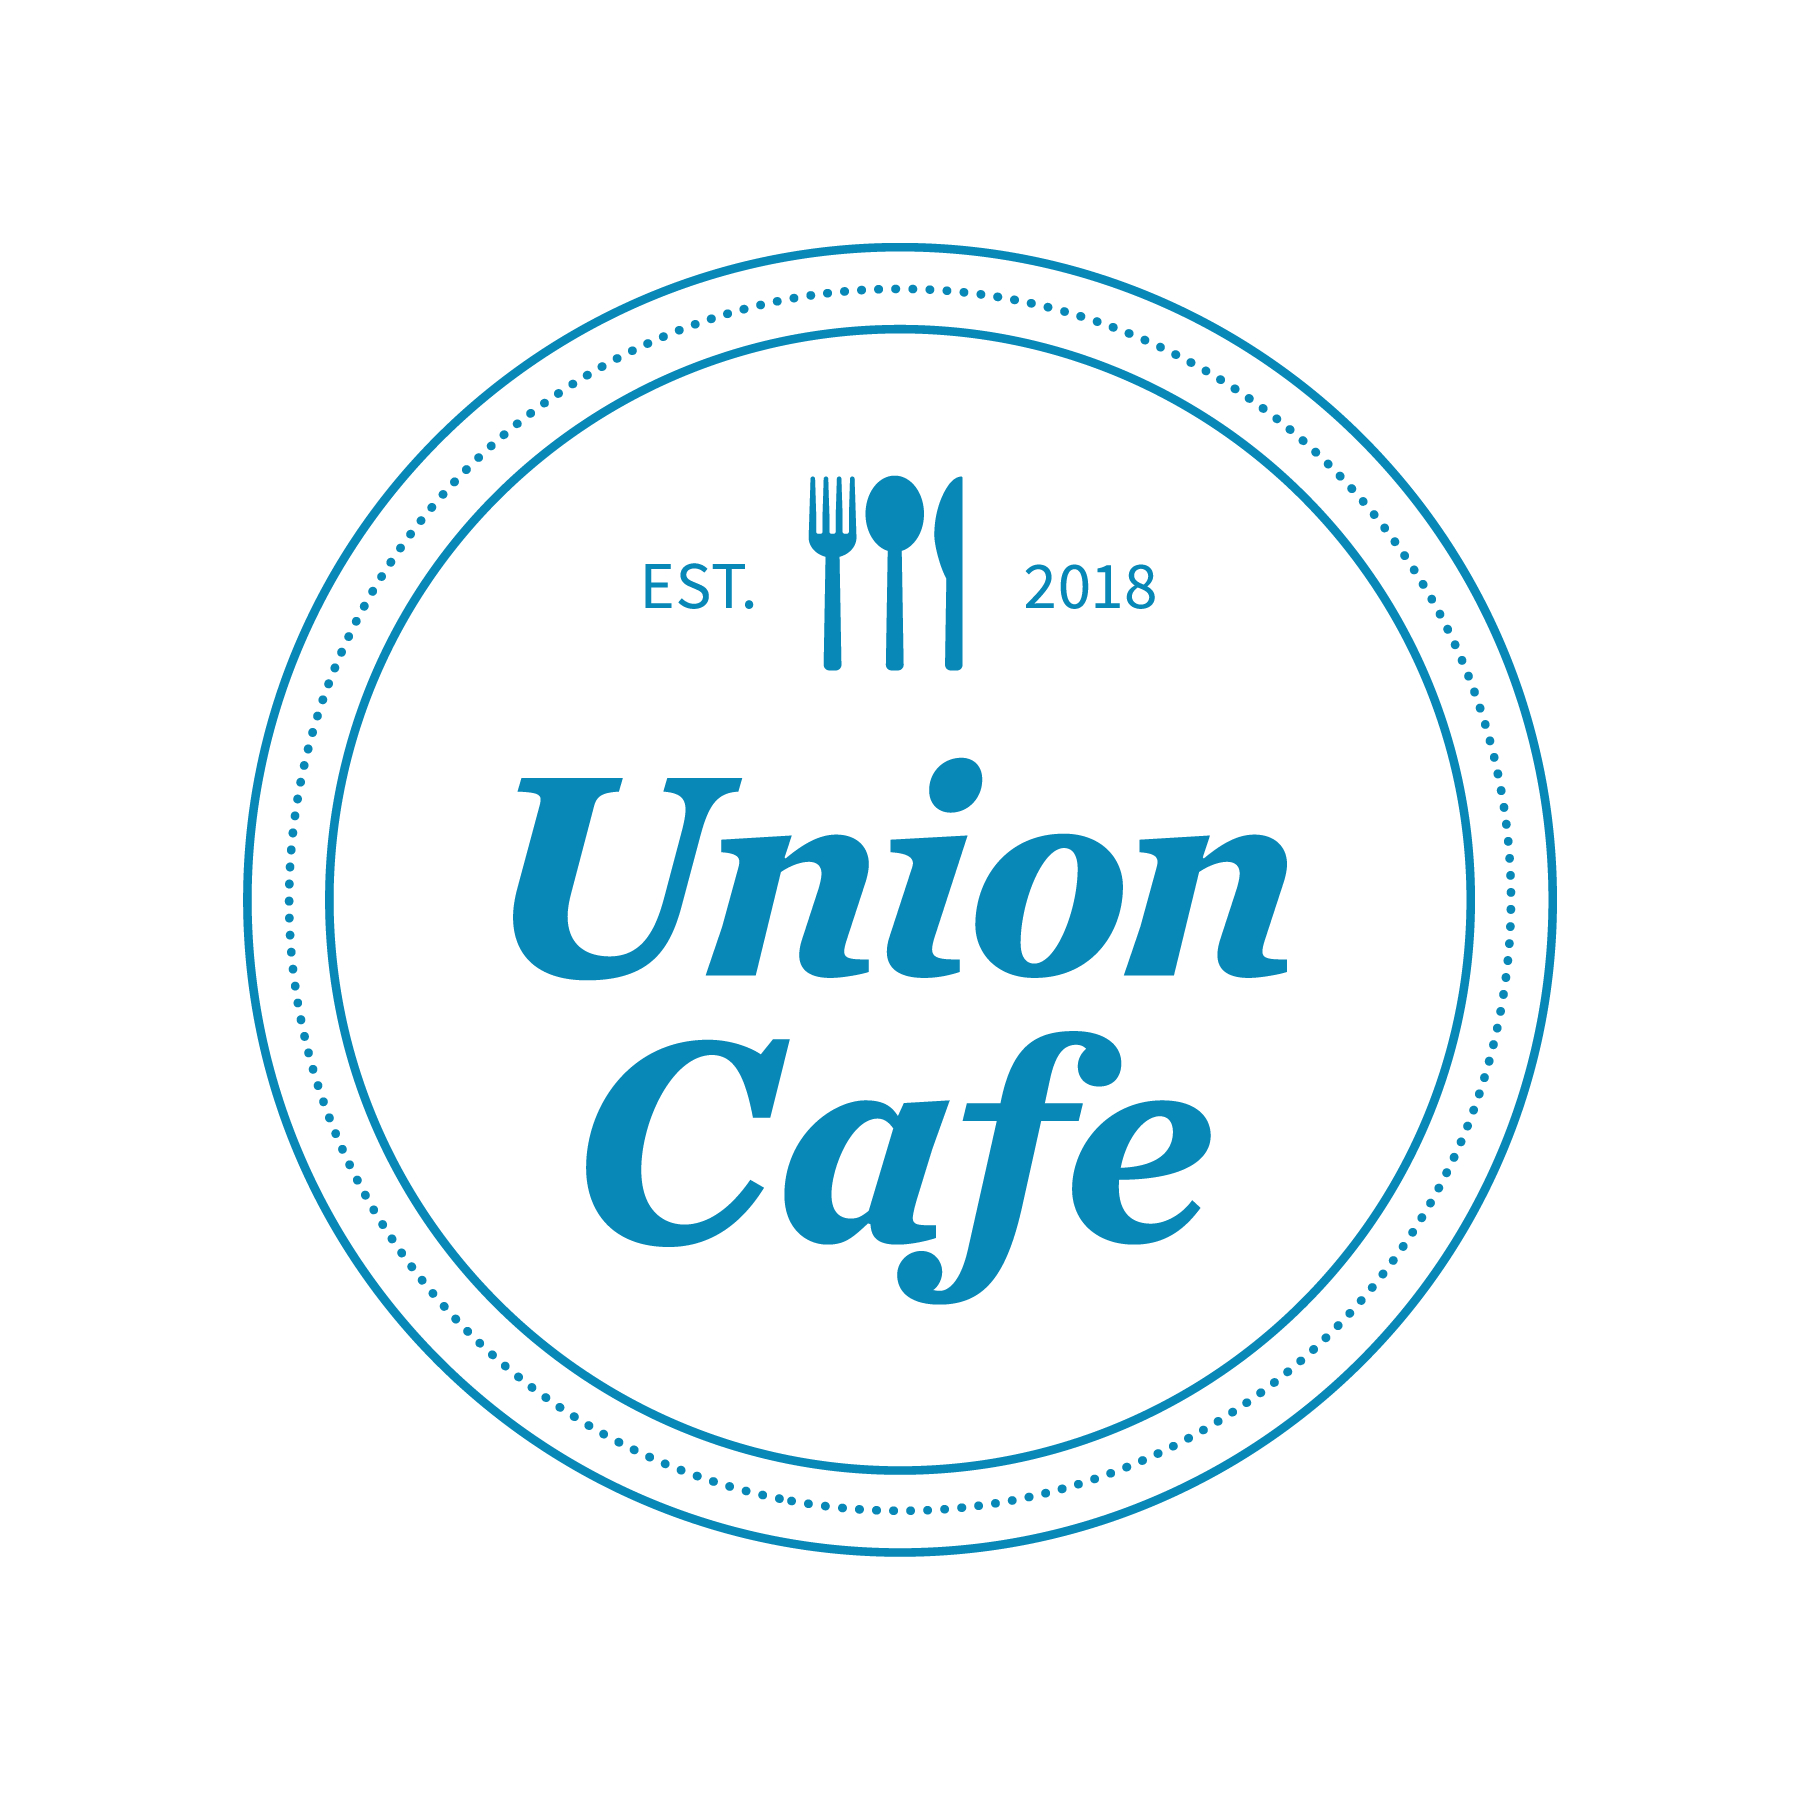 The Union Cafe logo.